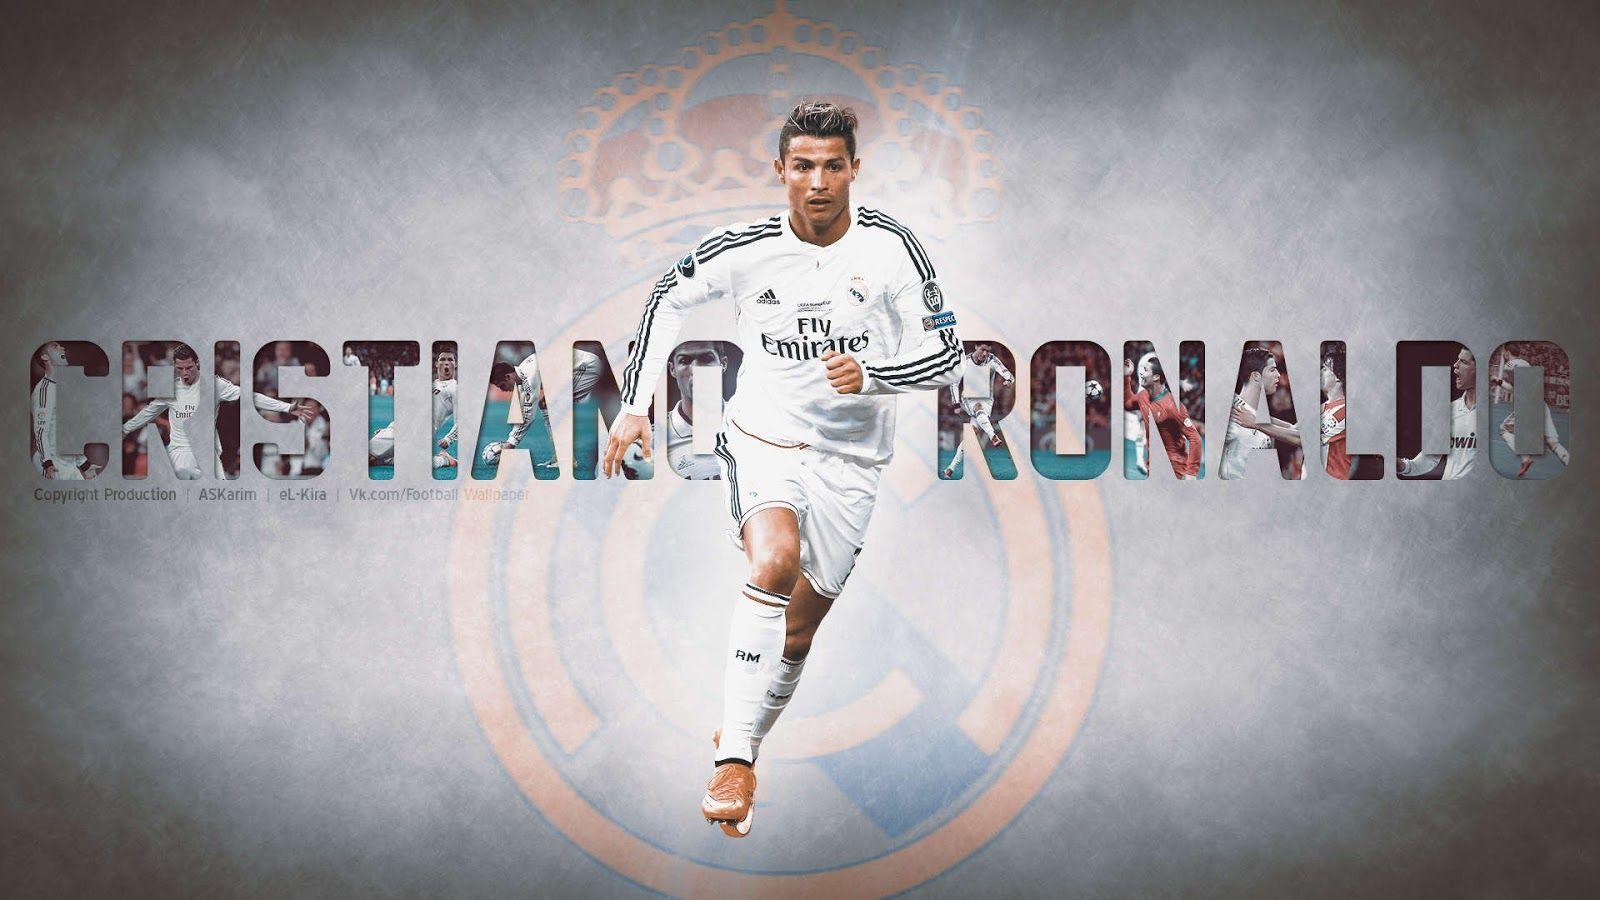 Wallpaper Cristiano Ronaldo HD terbaru 2016